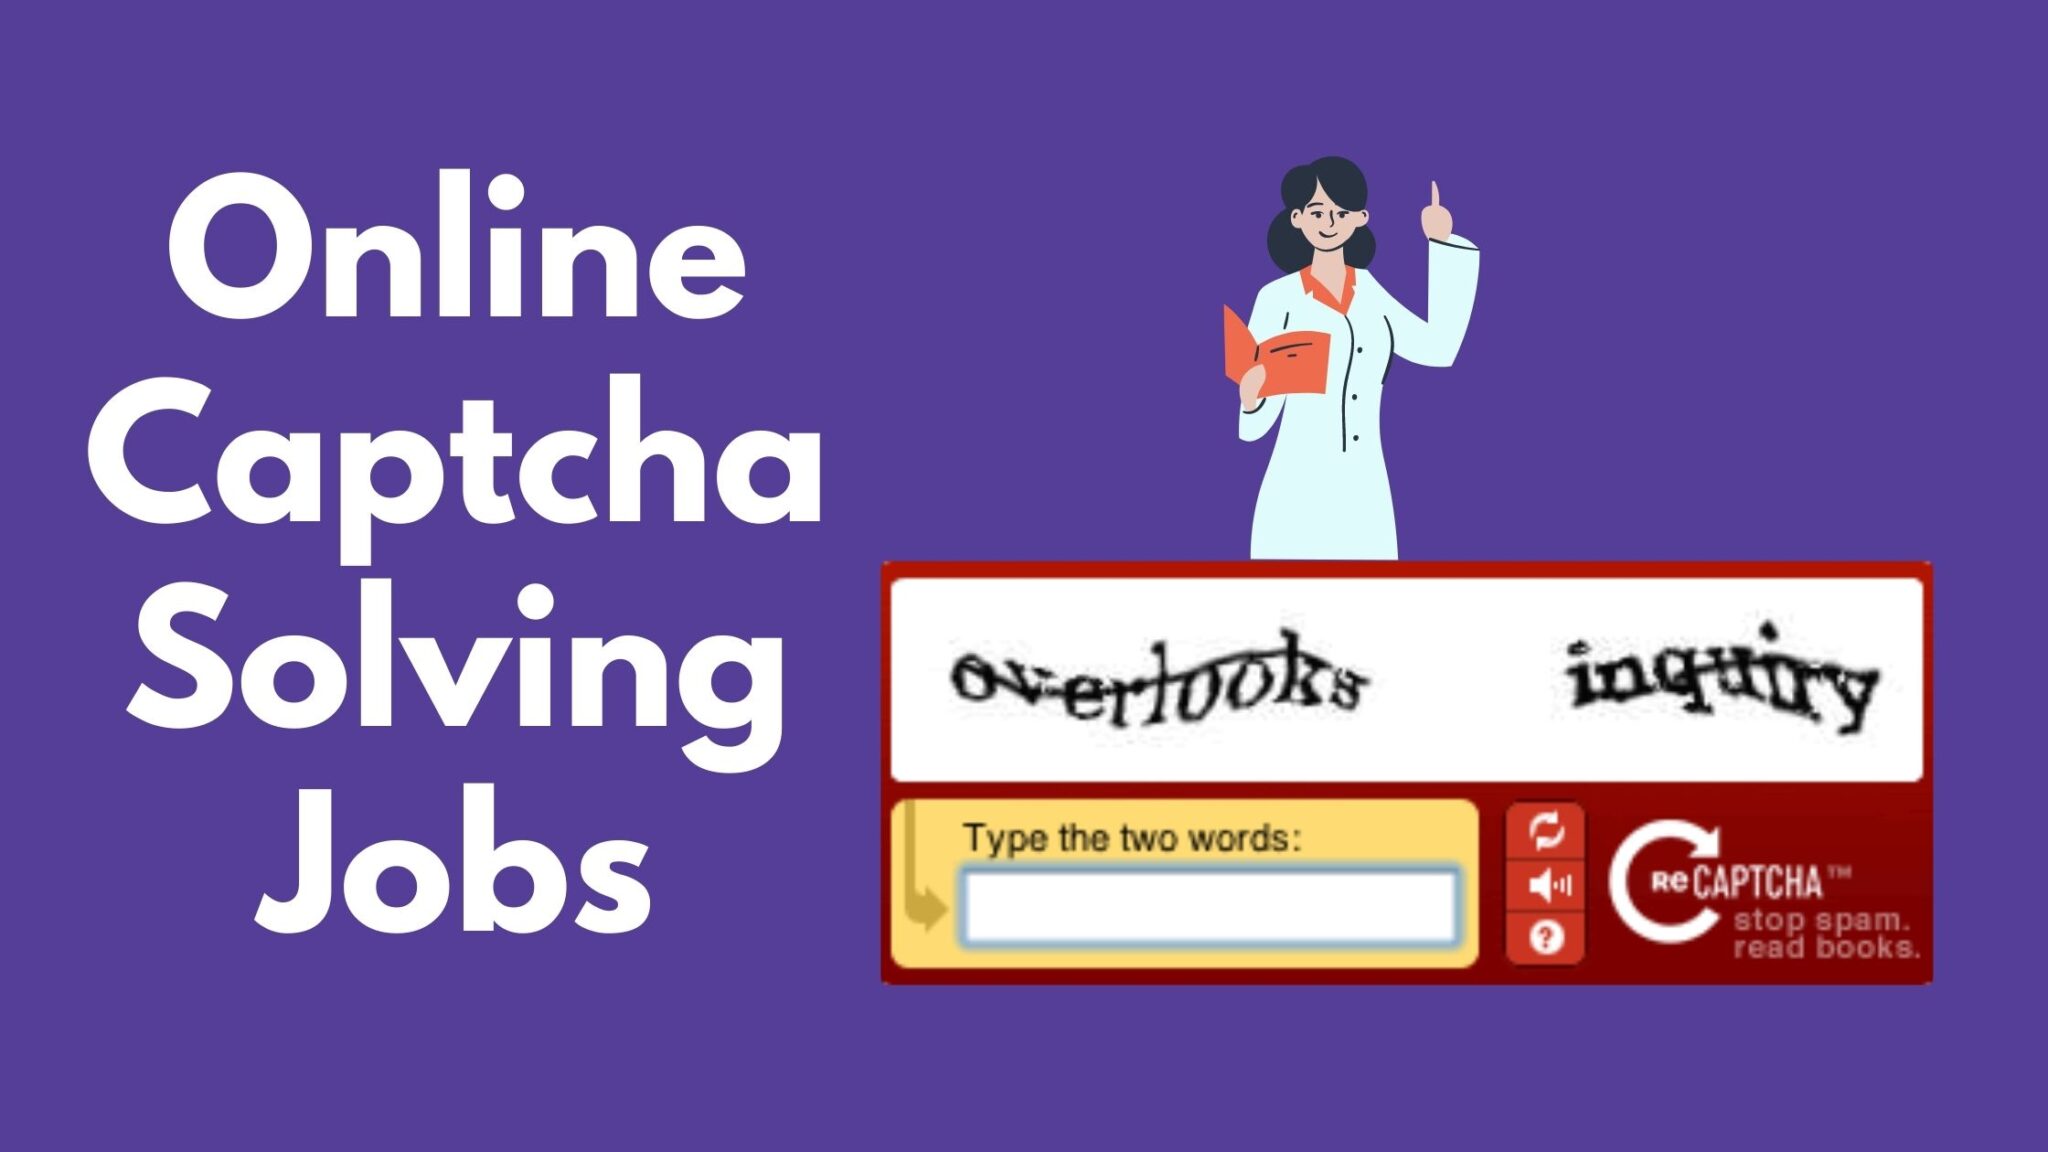 solve captcha to earn money